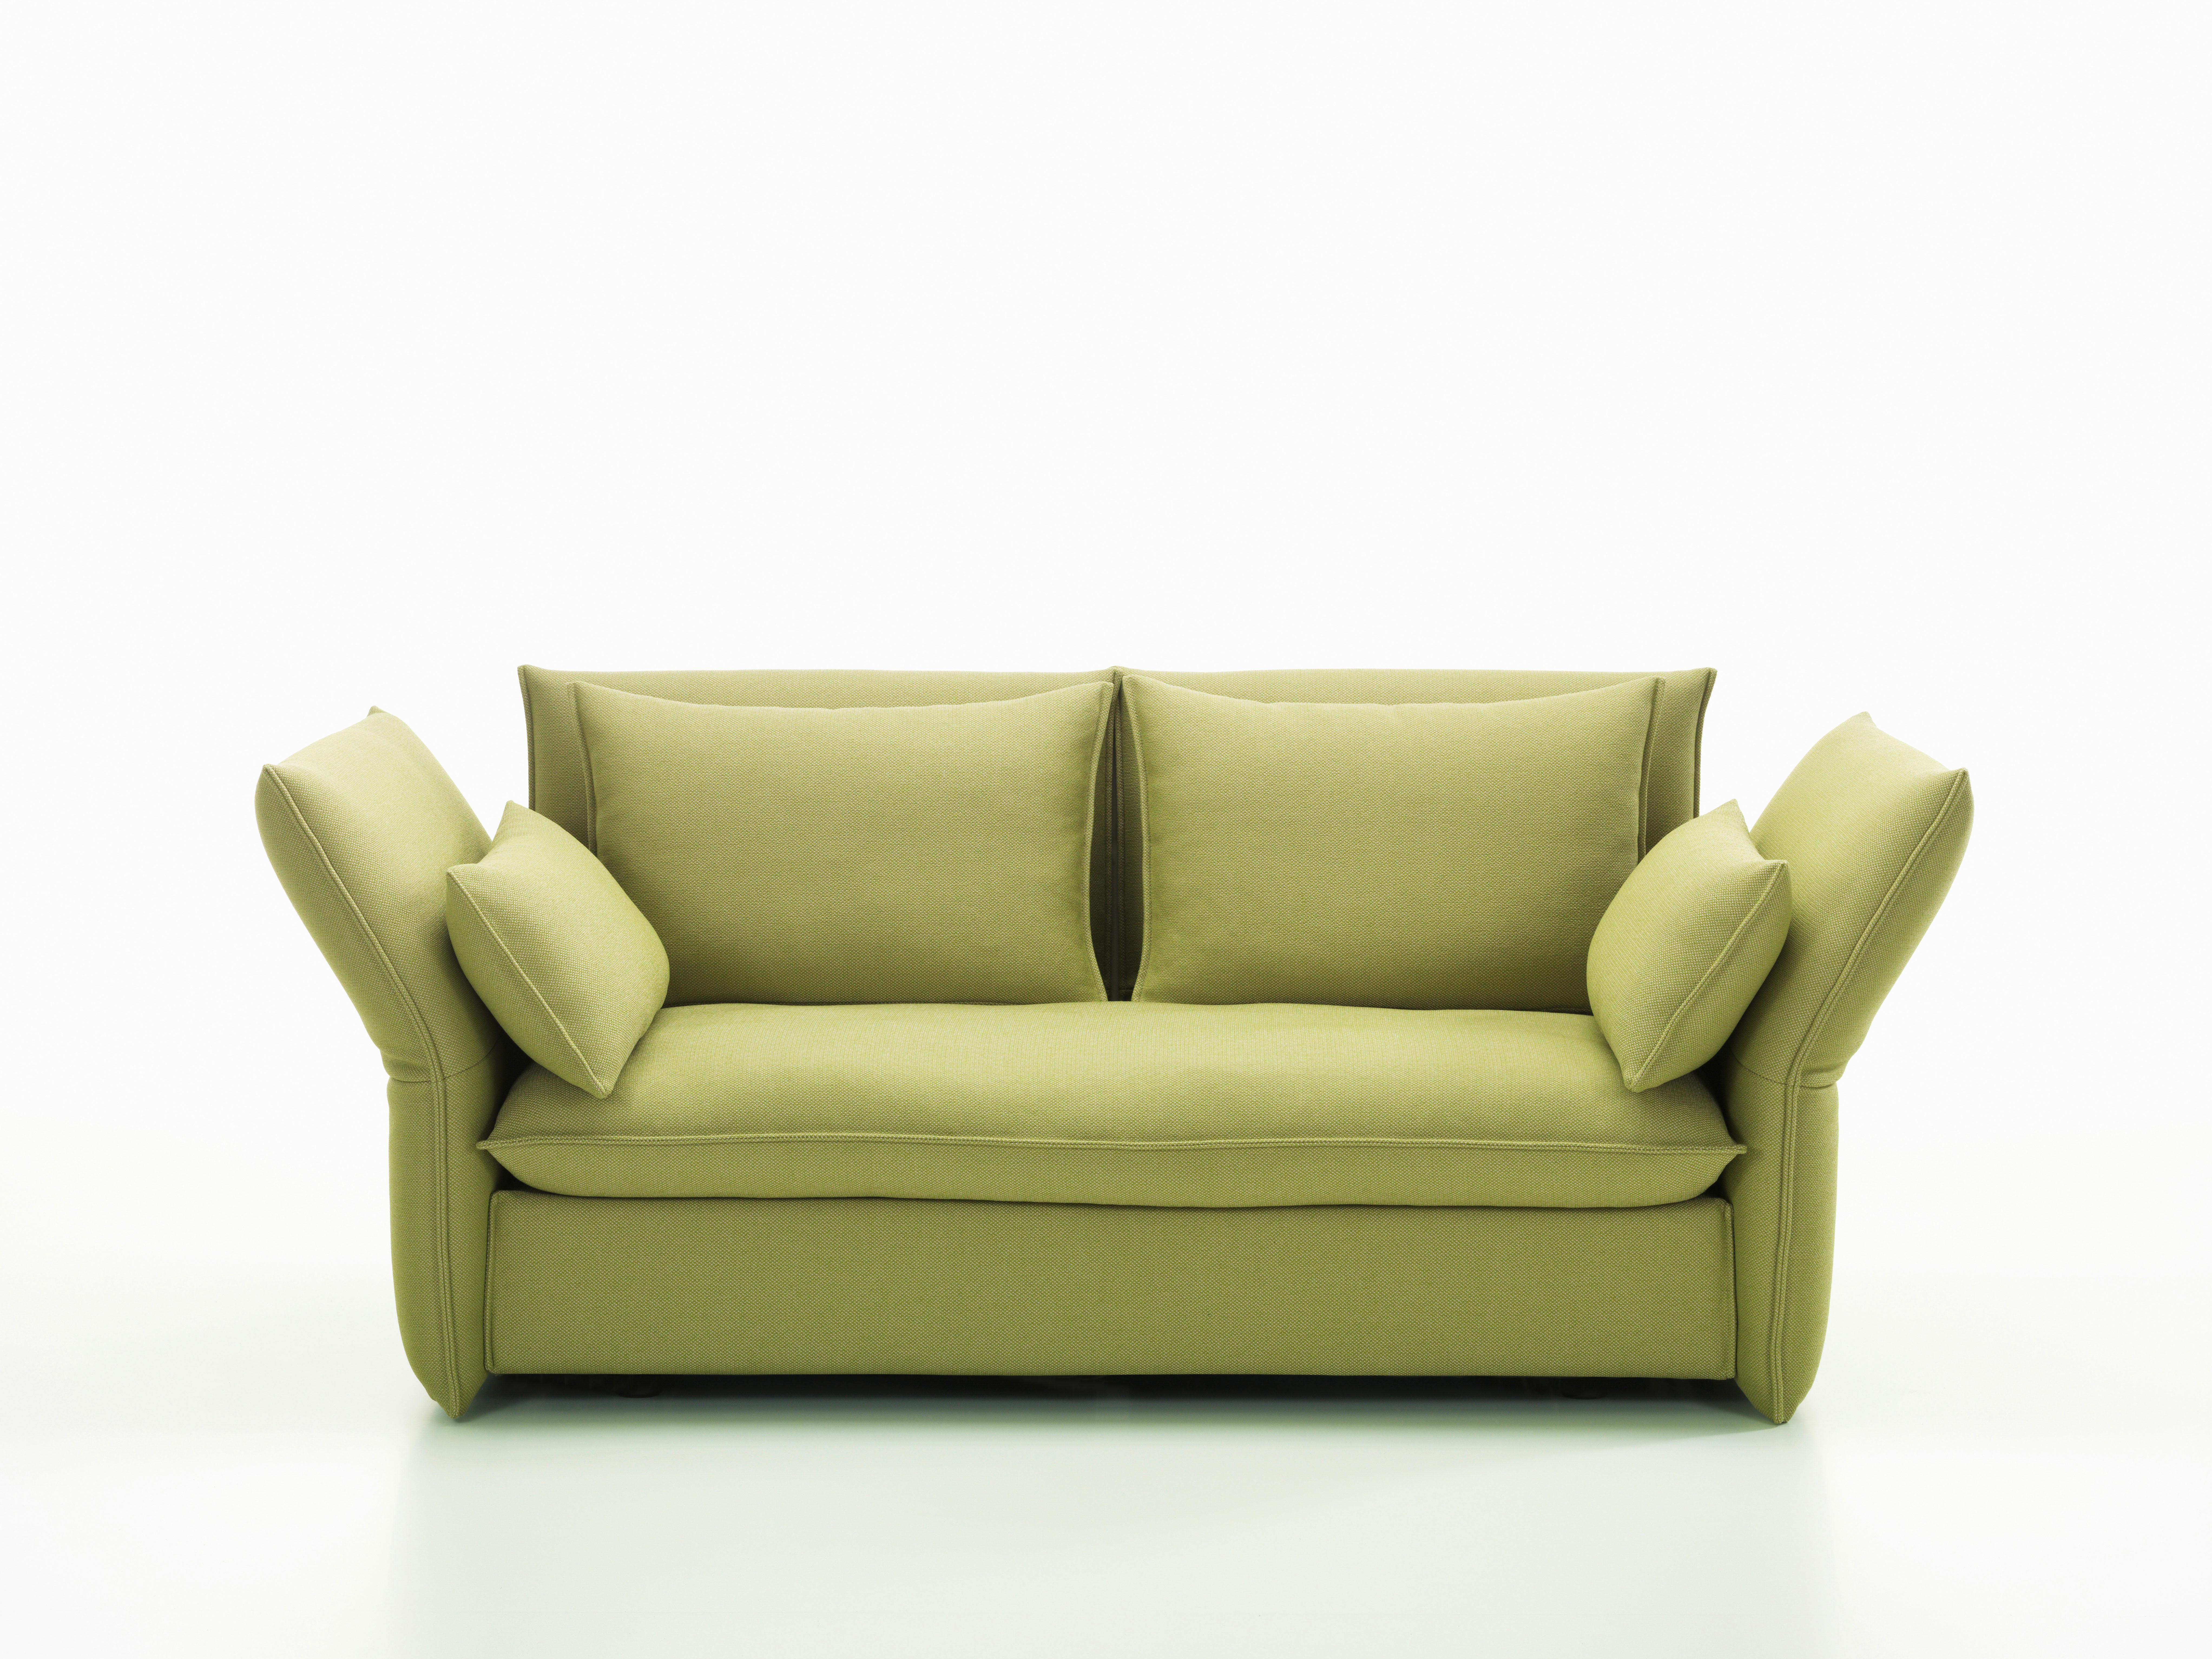 Vitra Mariposa 2-Seat Sofa in Sand & Avocado Credo by Edward Barber & Jay For Sale 2